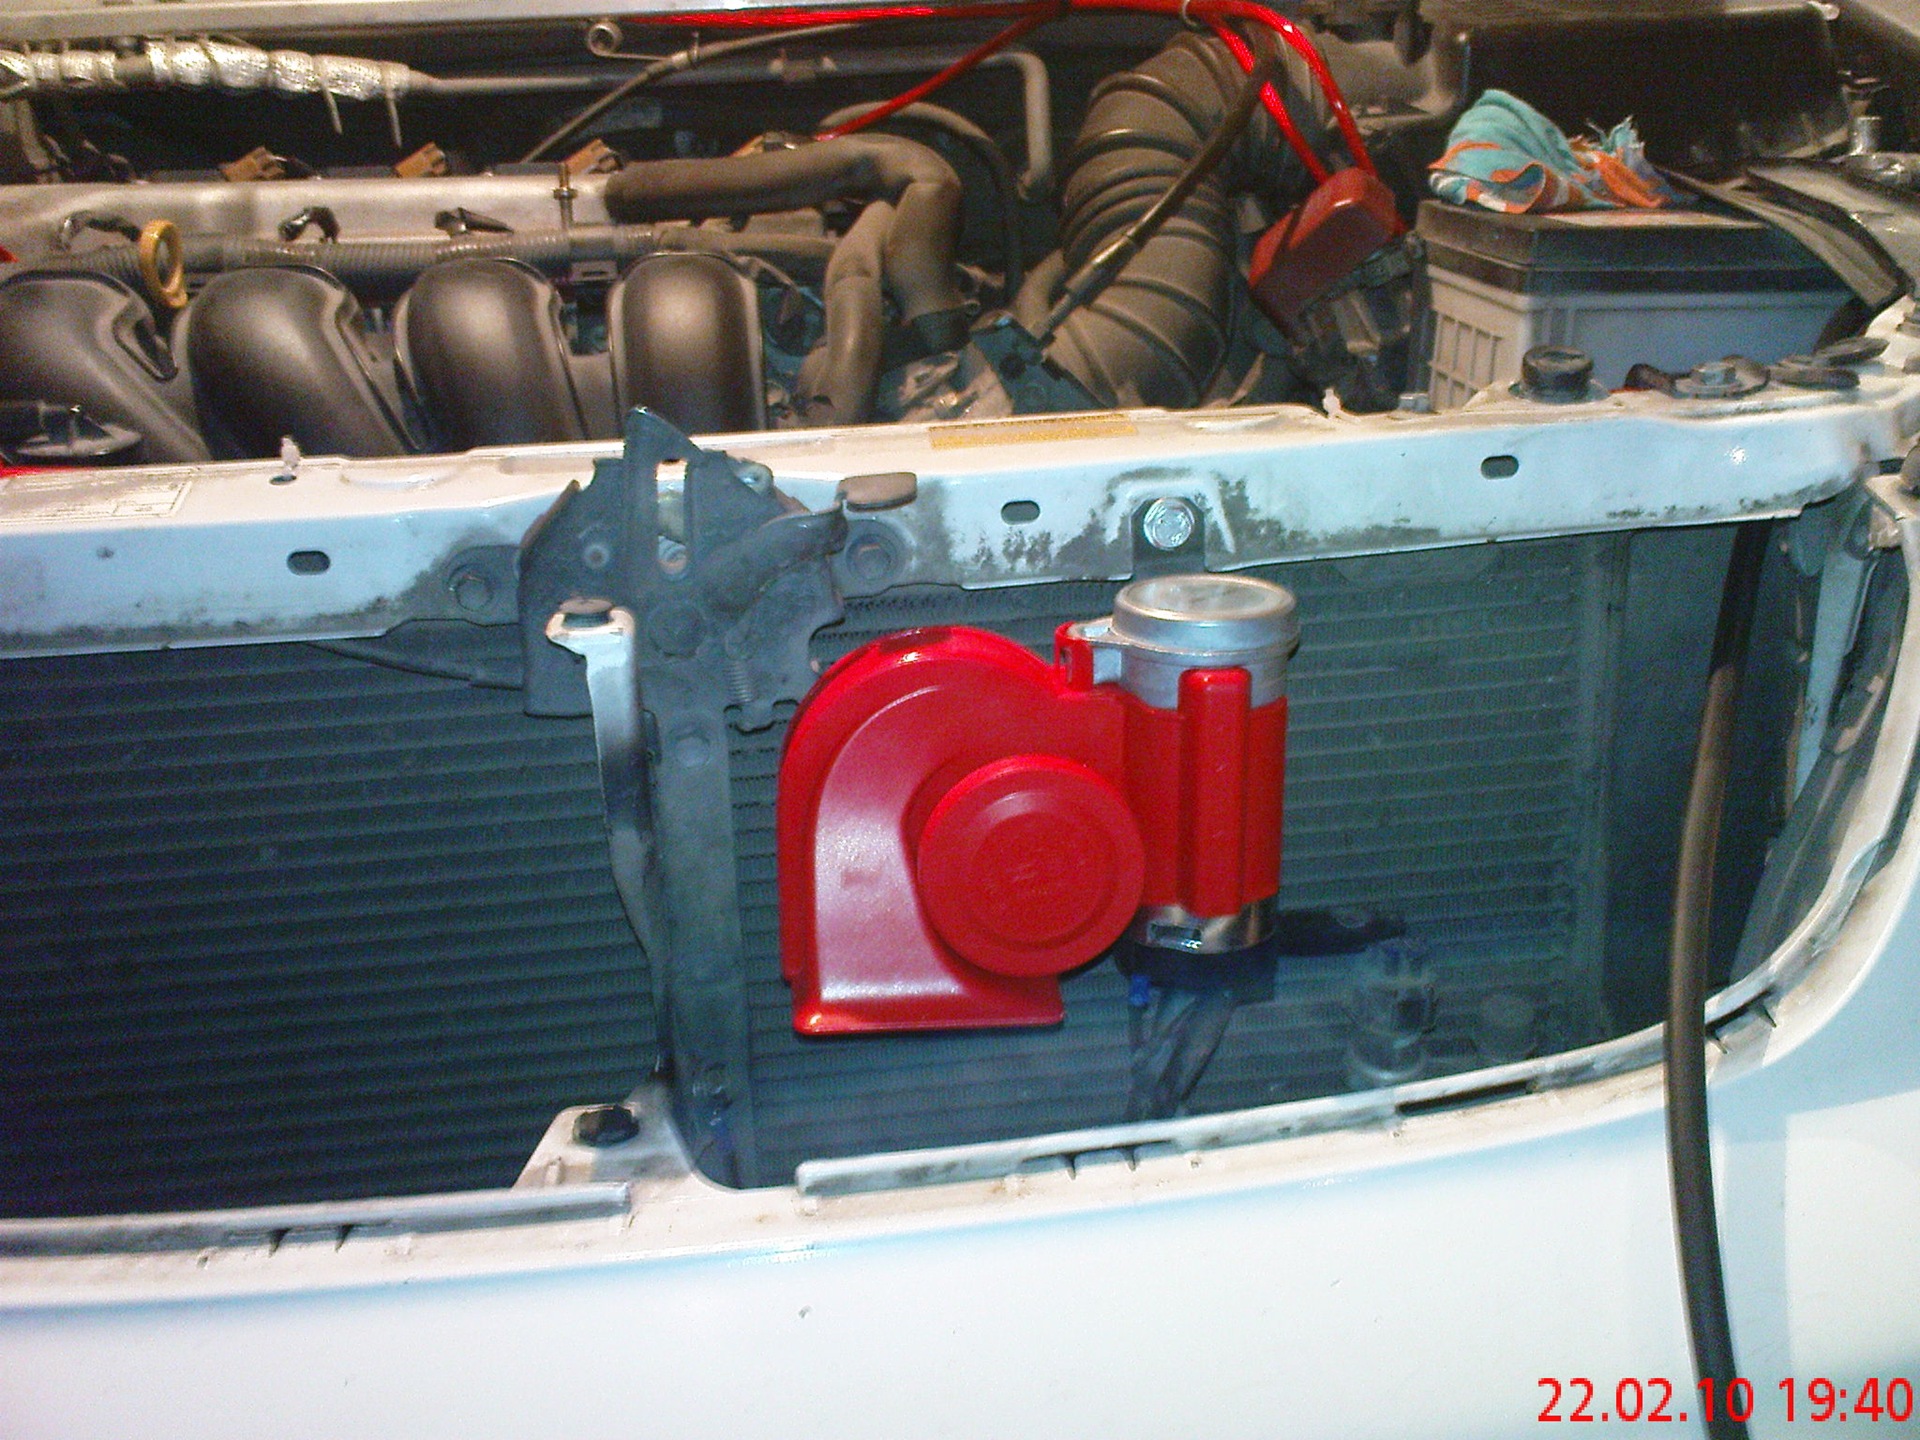 Installation - Toyota Corolla 18 L 2003